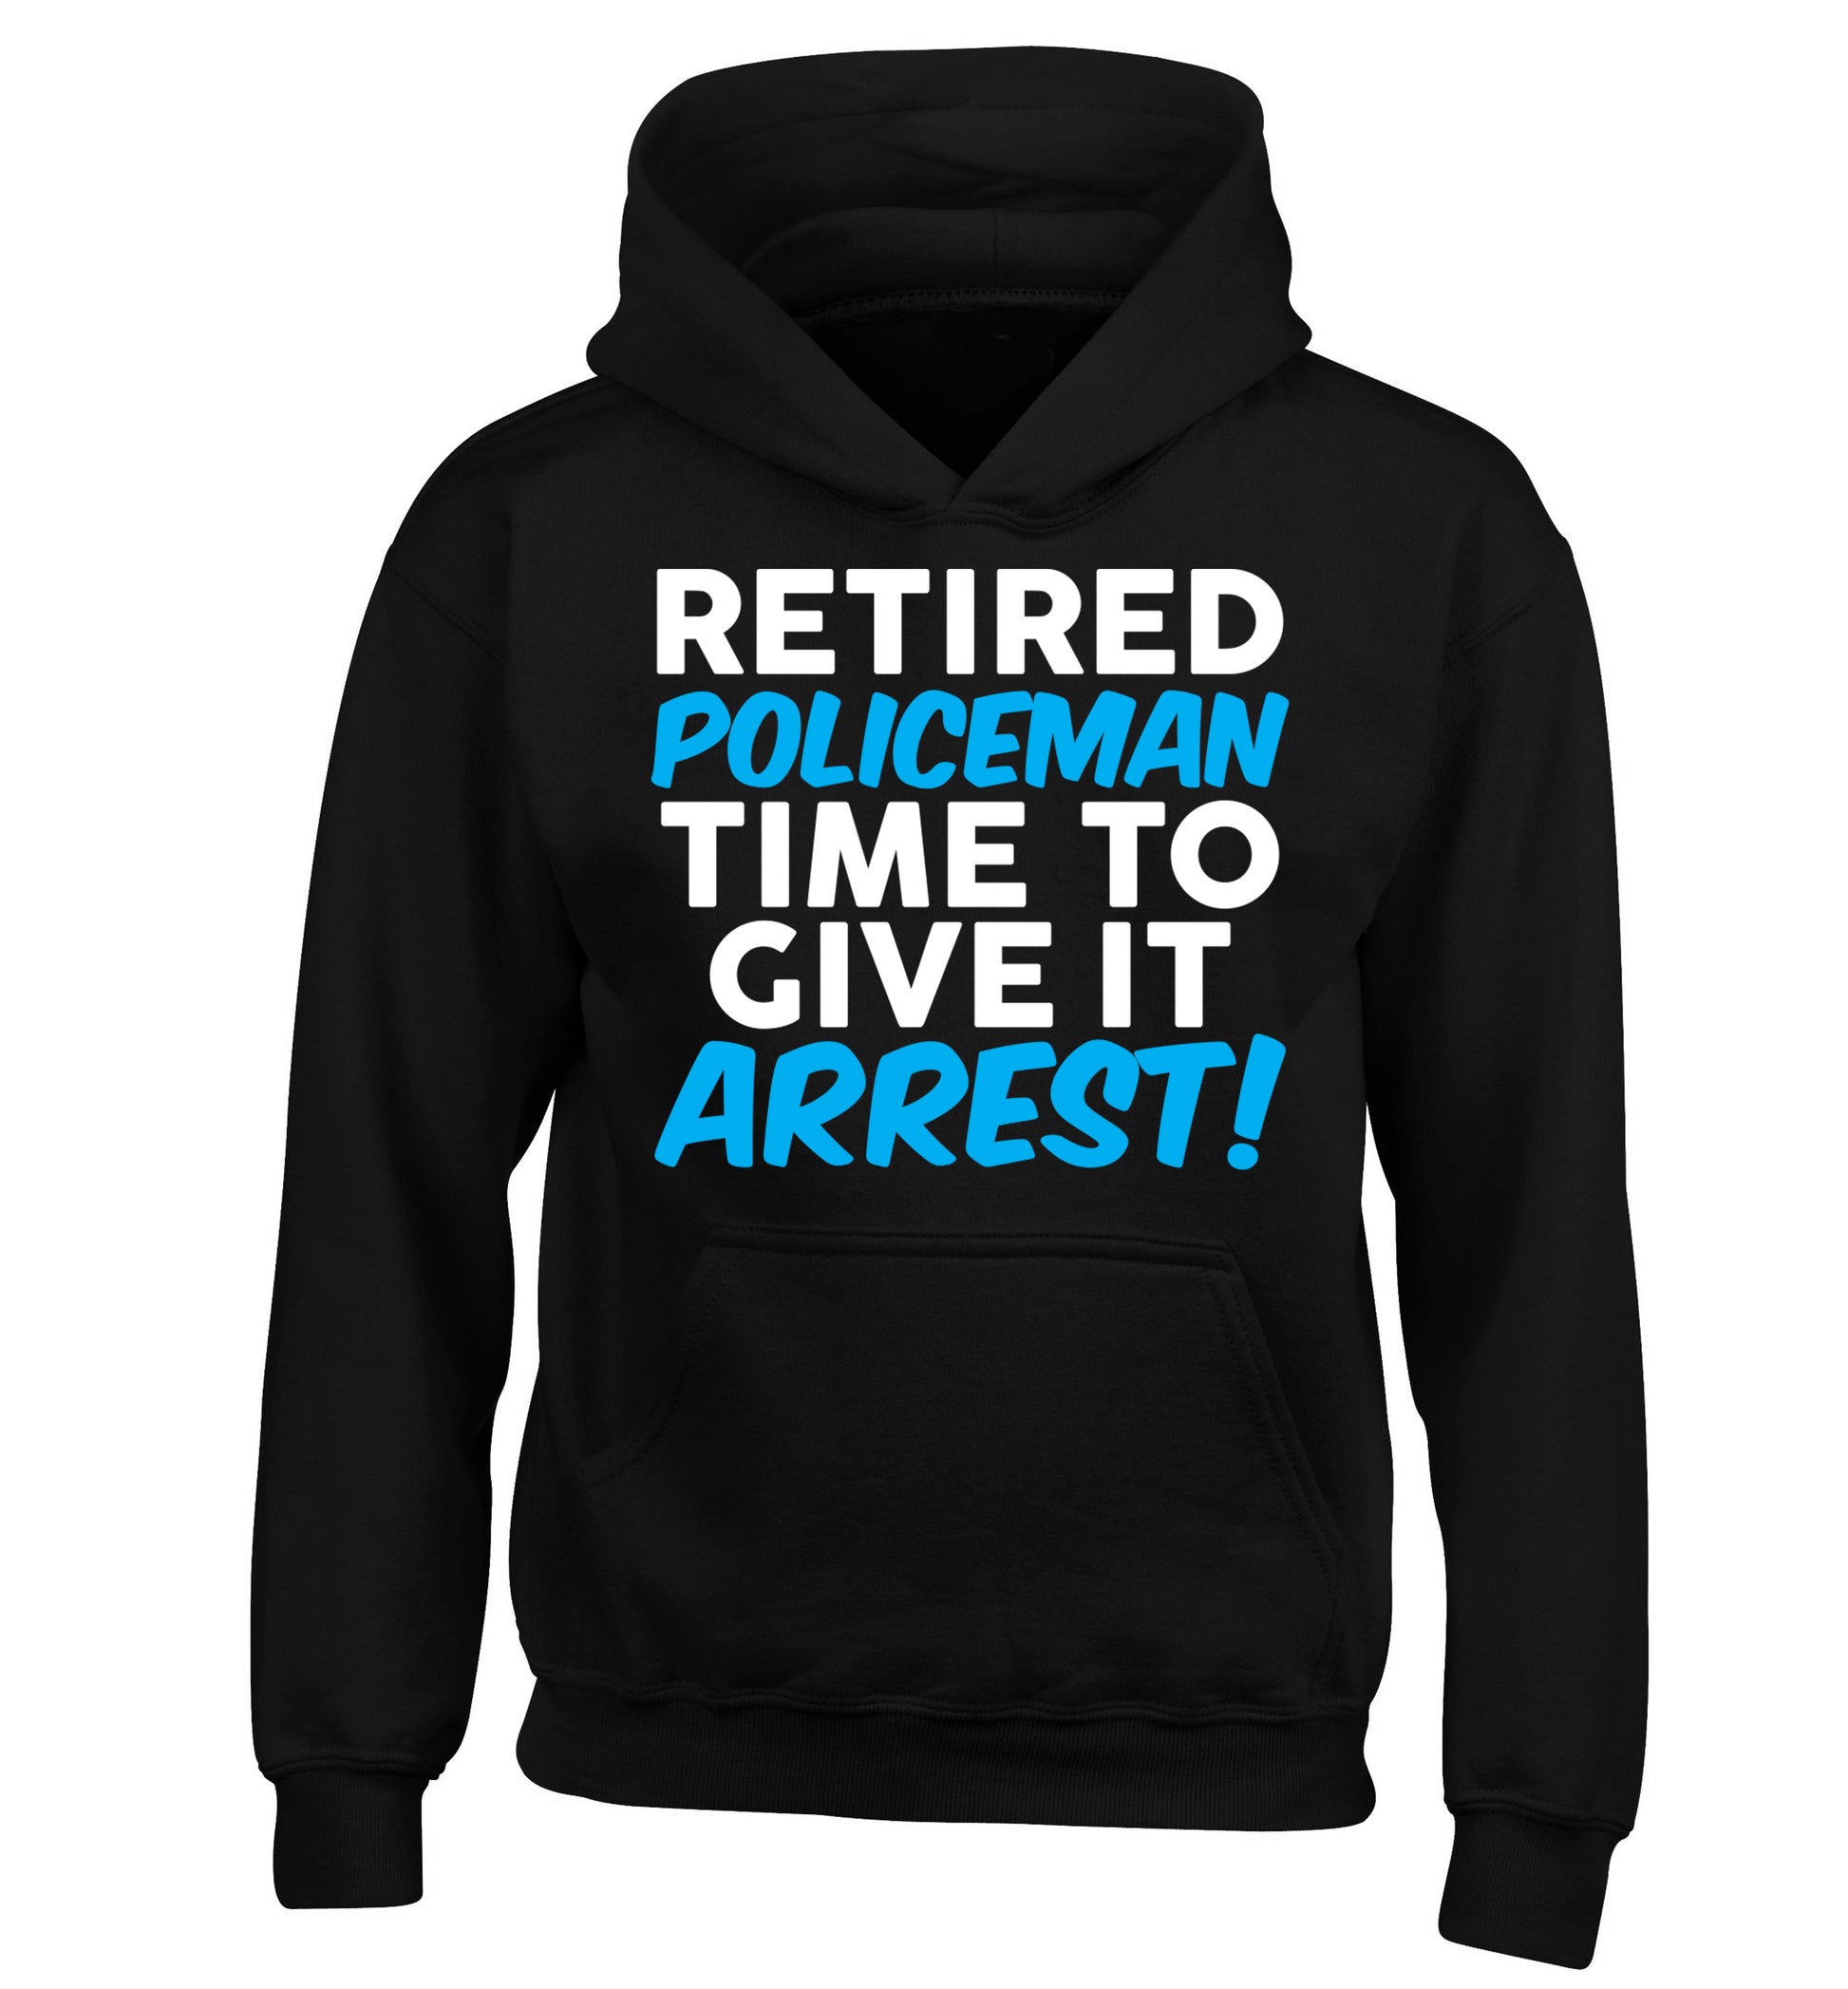 Retired policeman give it arresst! children's black hoodie 12-13 Years